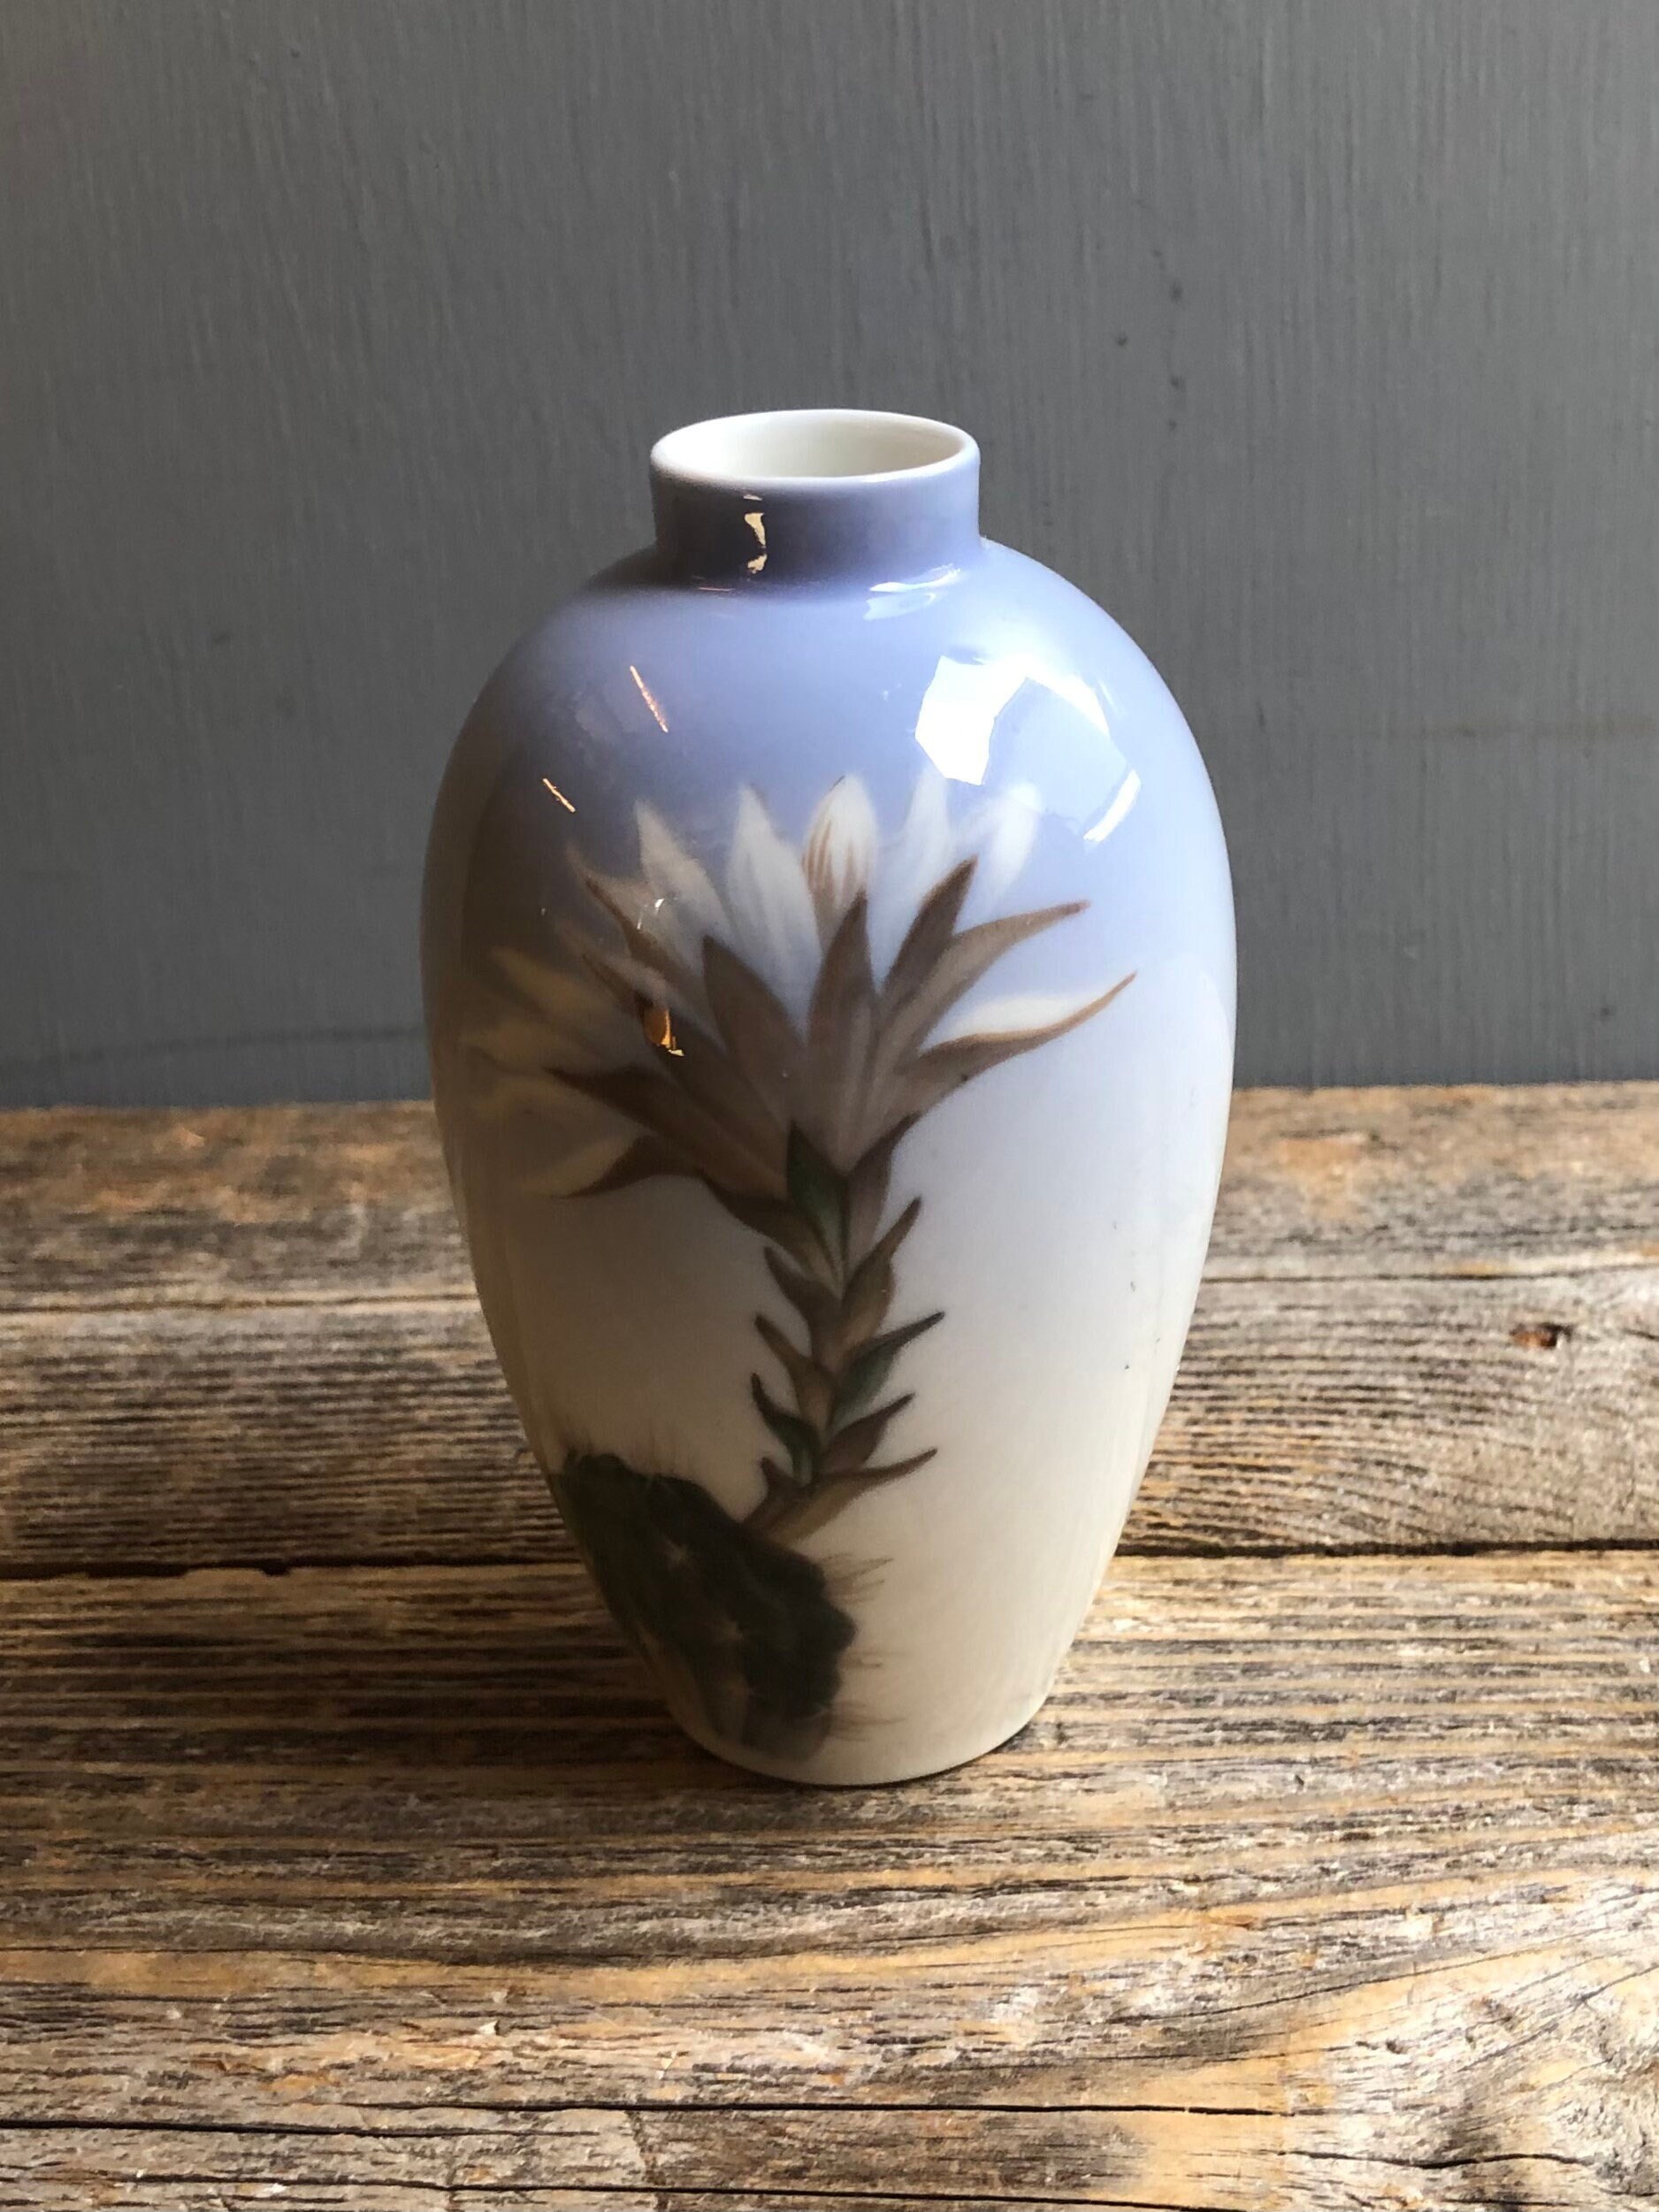 Vintage 1940's Artistic Potteries Vase Scented Candle Cactus Flower